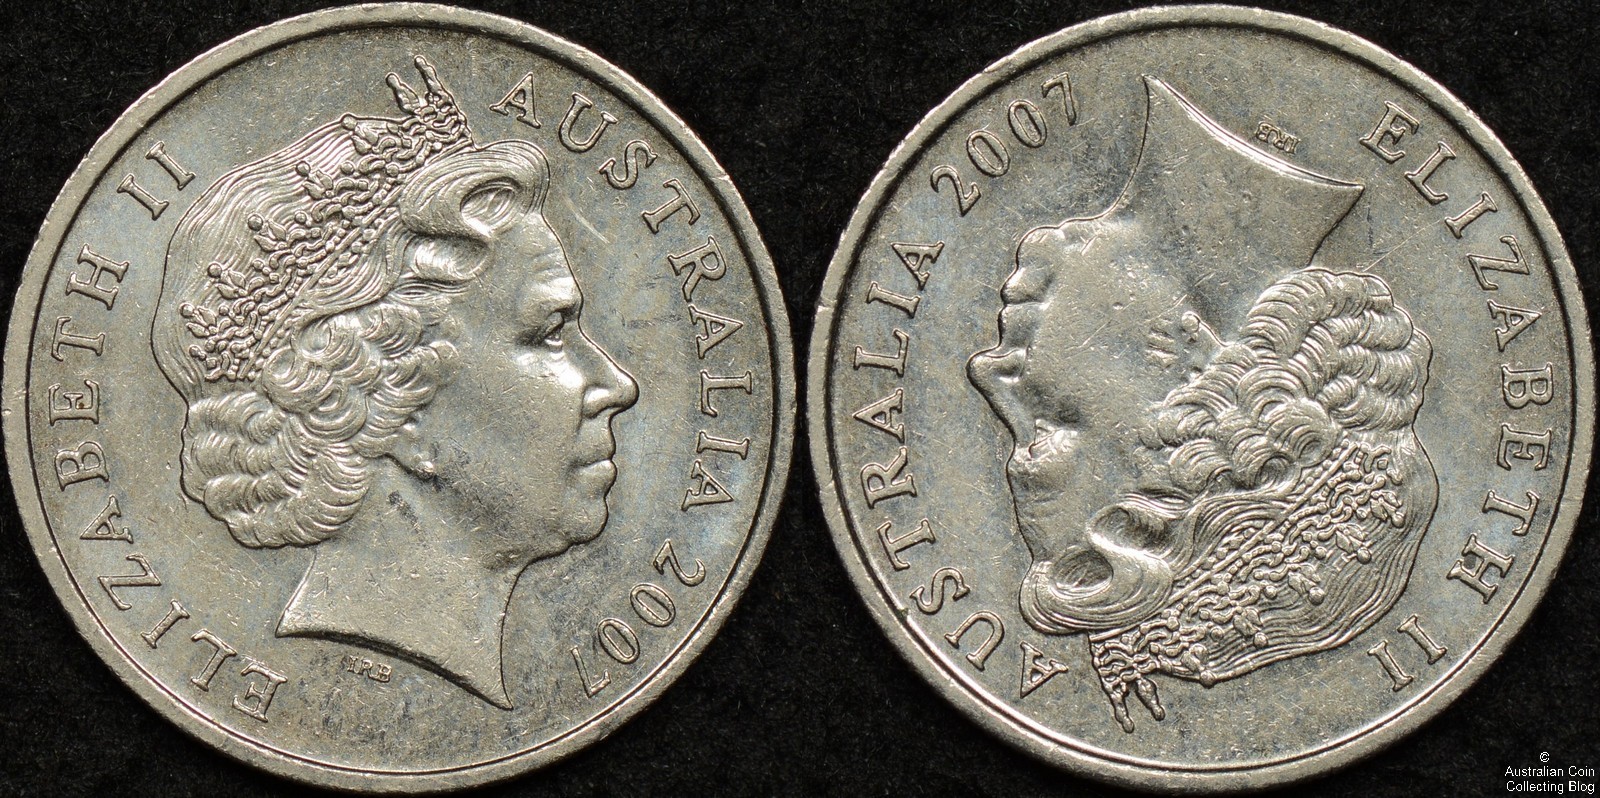 Australian Coins Value